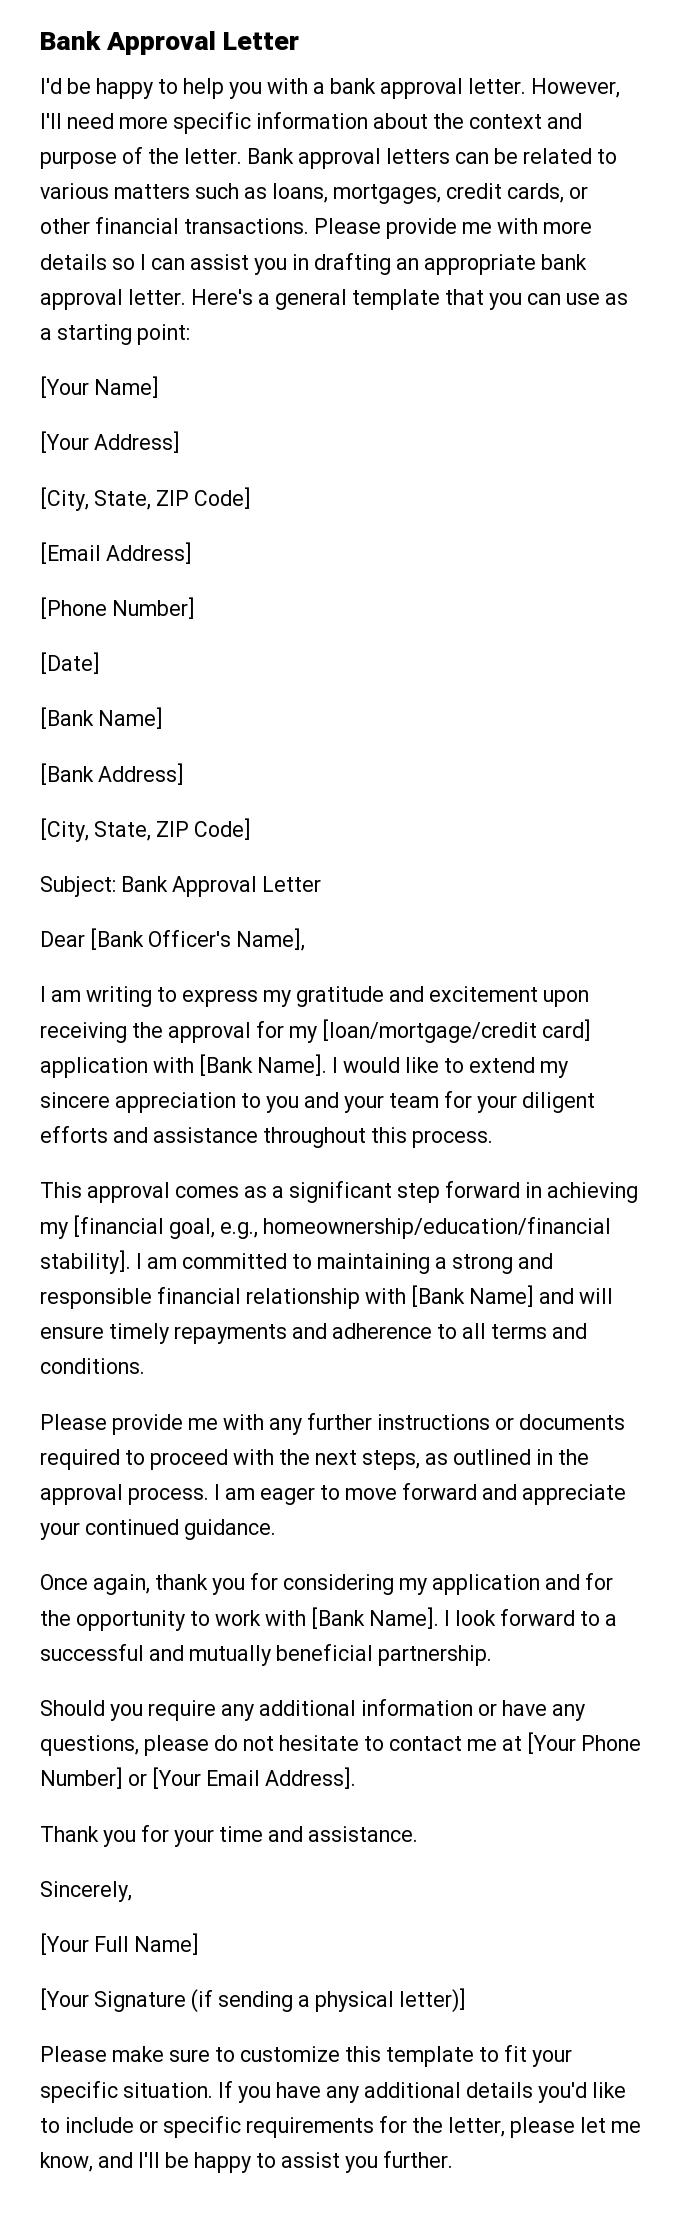 Bank Approval Letter